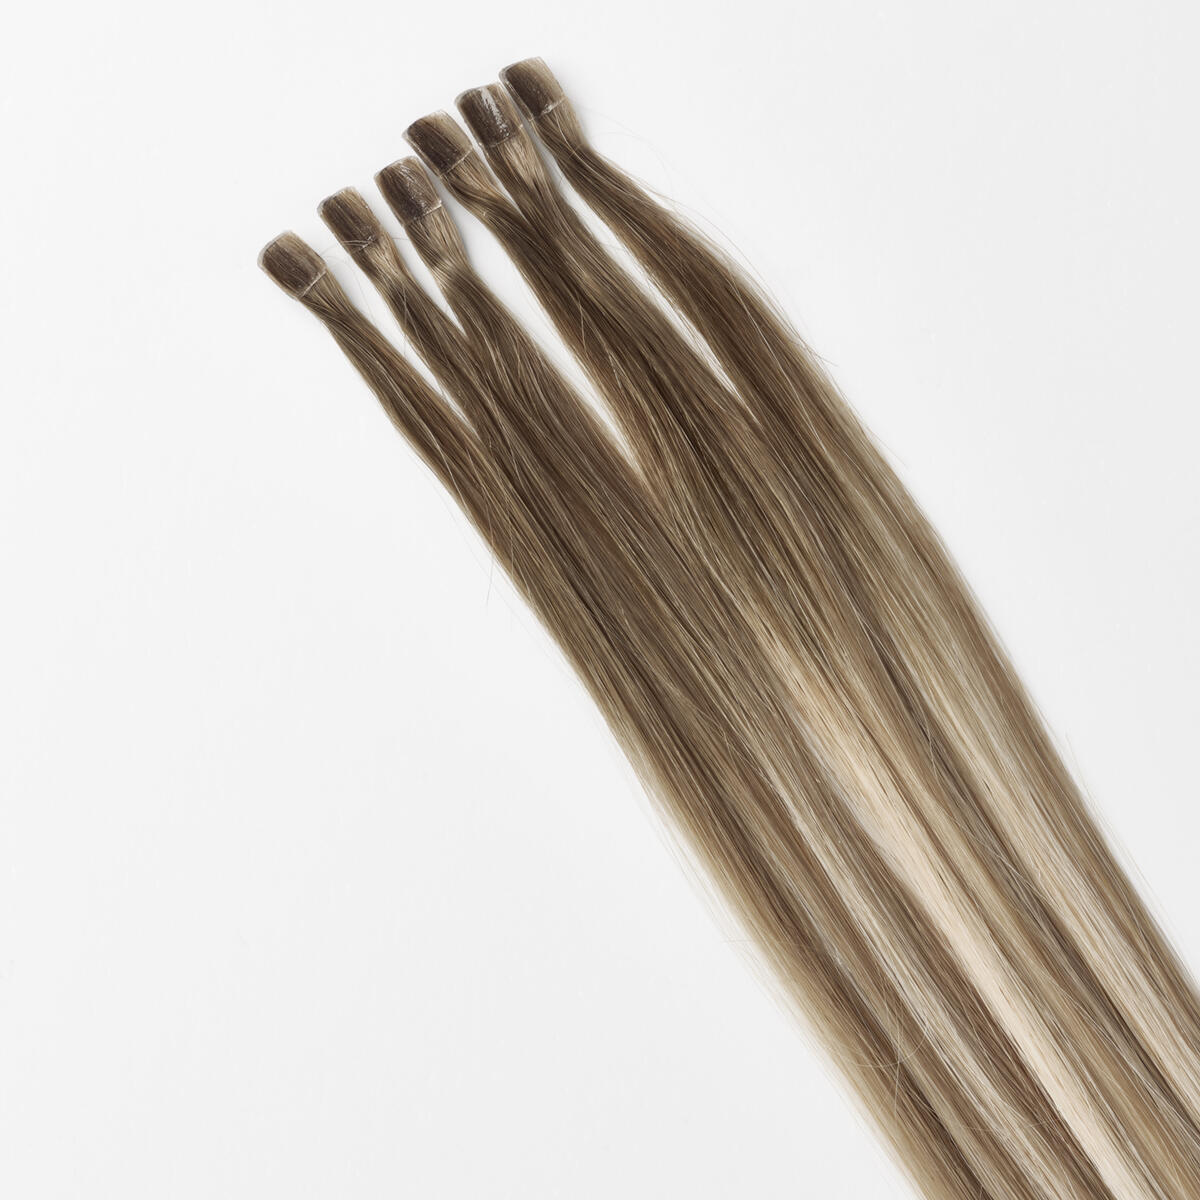 Premium Keratiini Sinettipidennykset - 20 pieces B2.6/10.7 Dark Ashy Blonde Balayage 50 cm